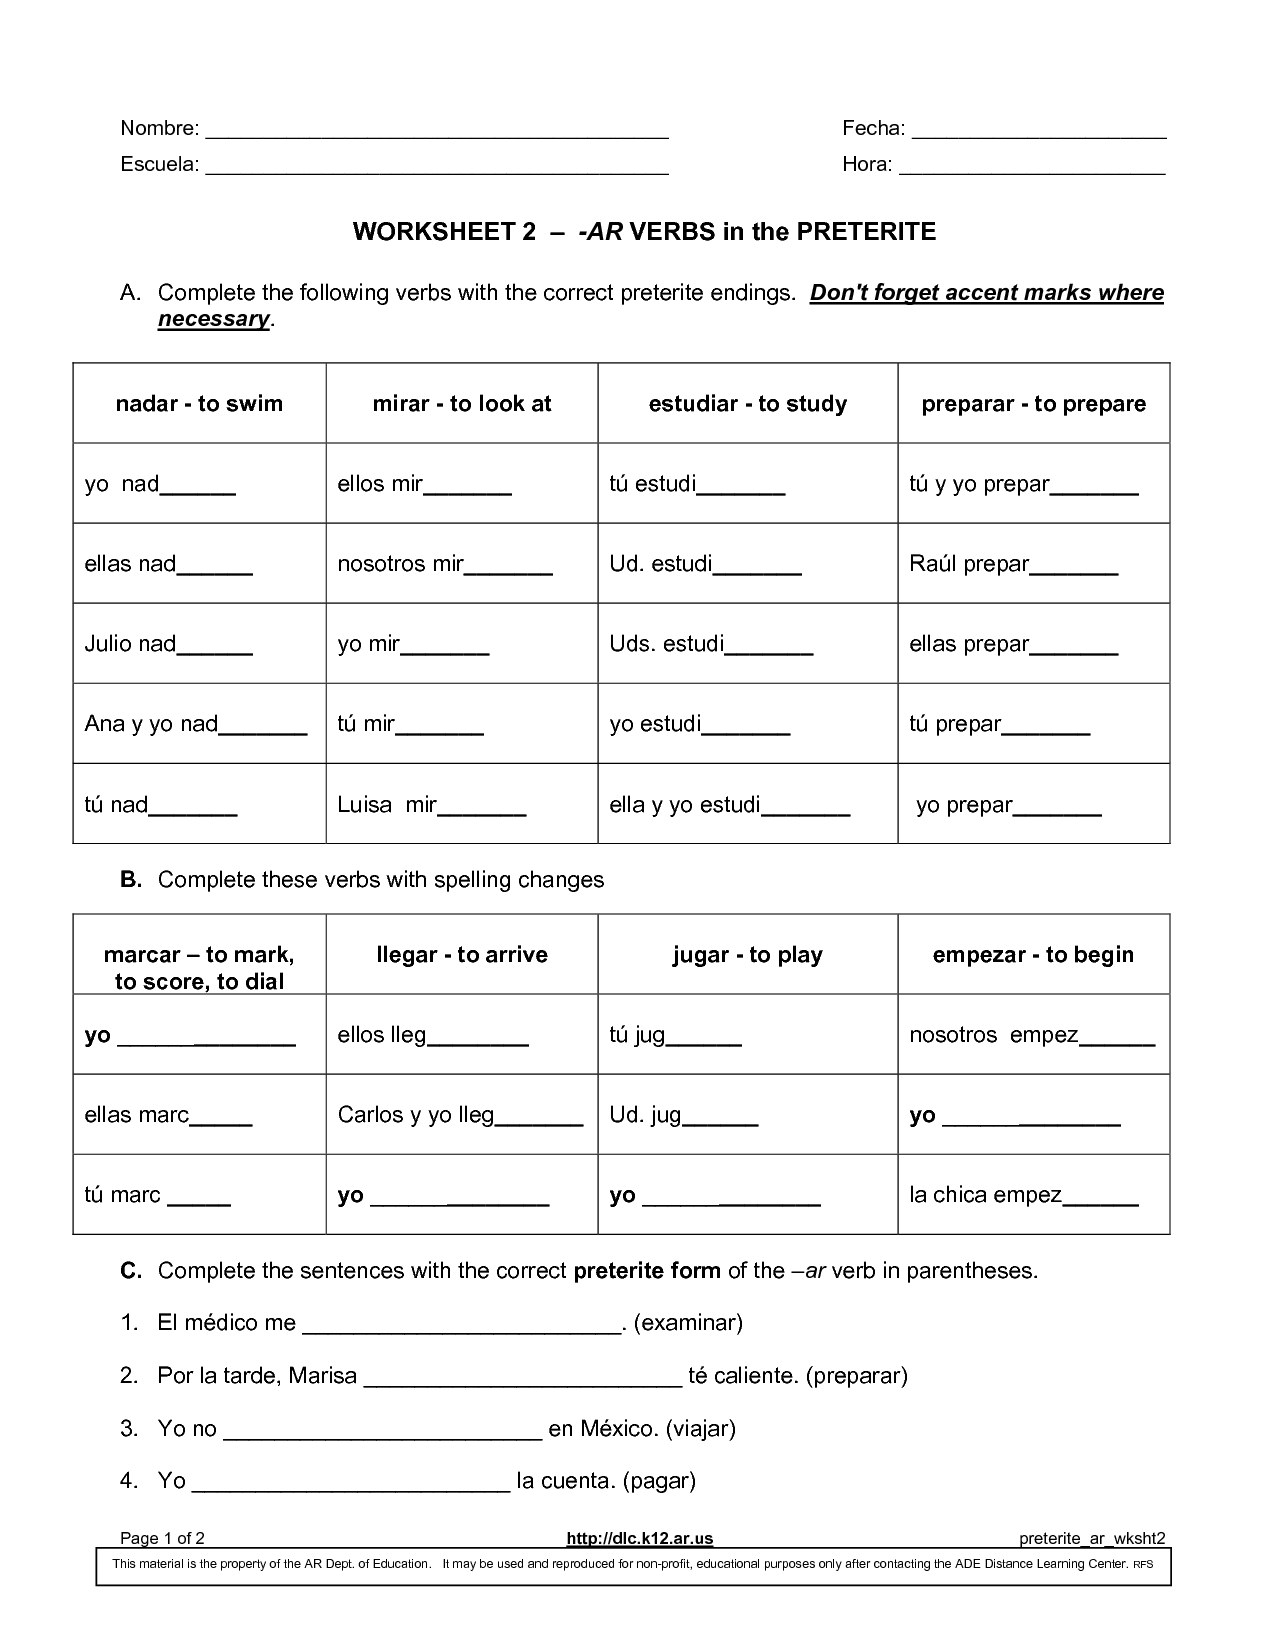 ar-verb-conjugation-worksheet